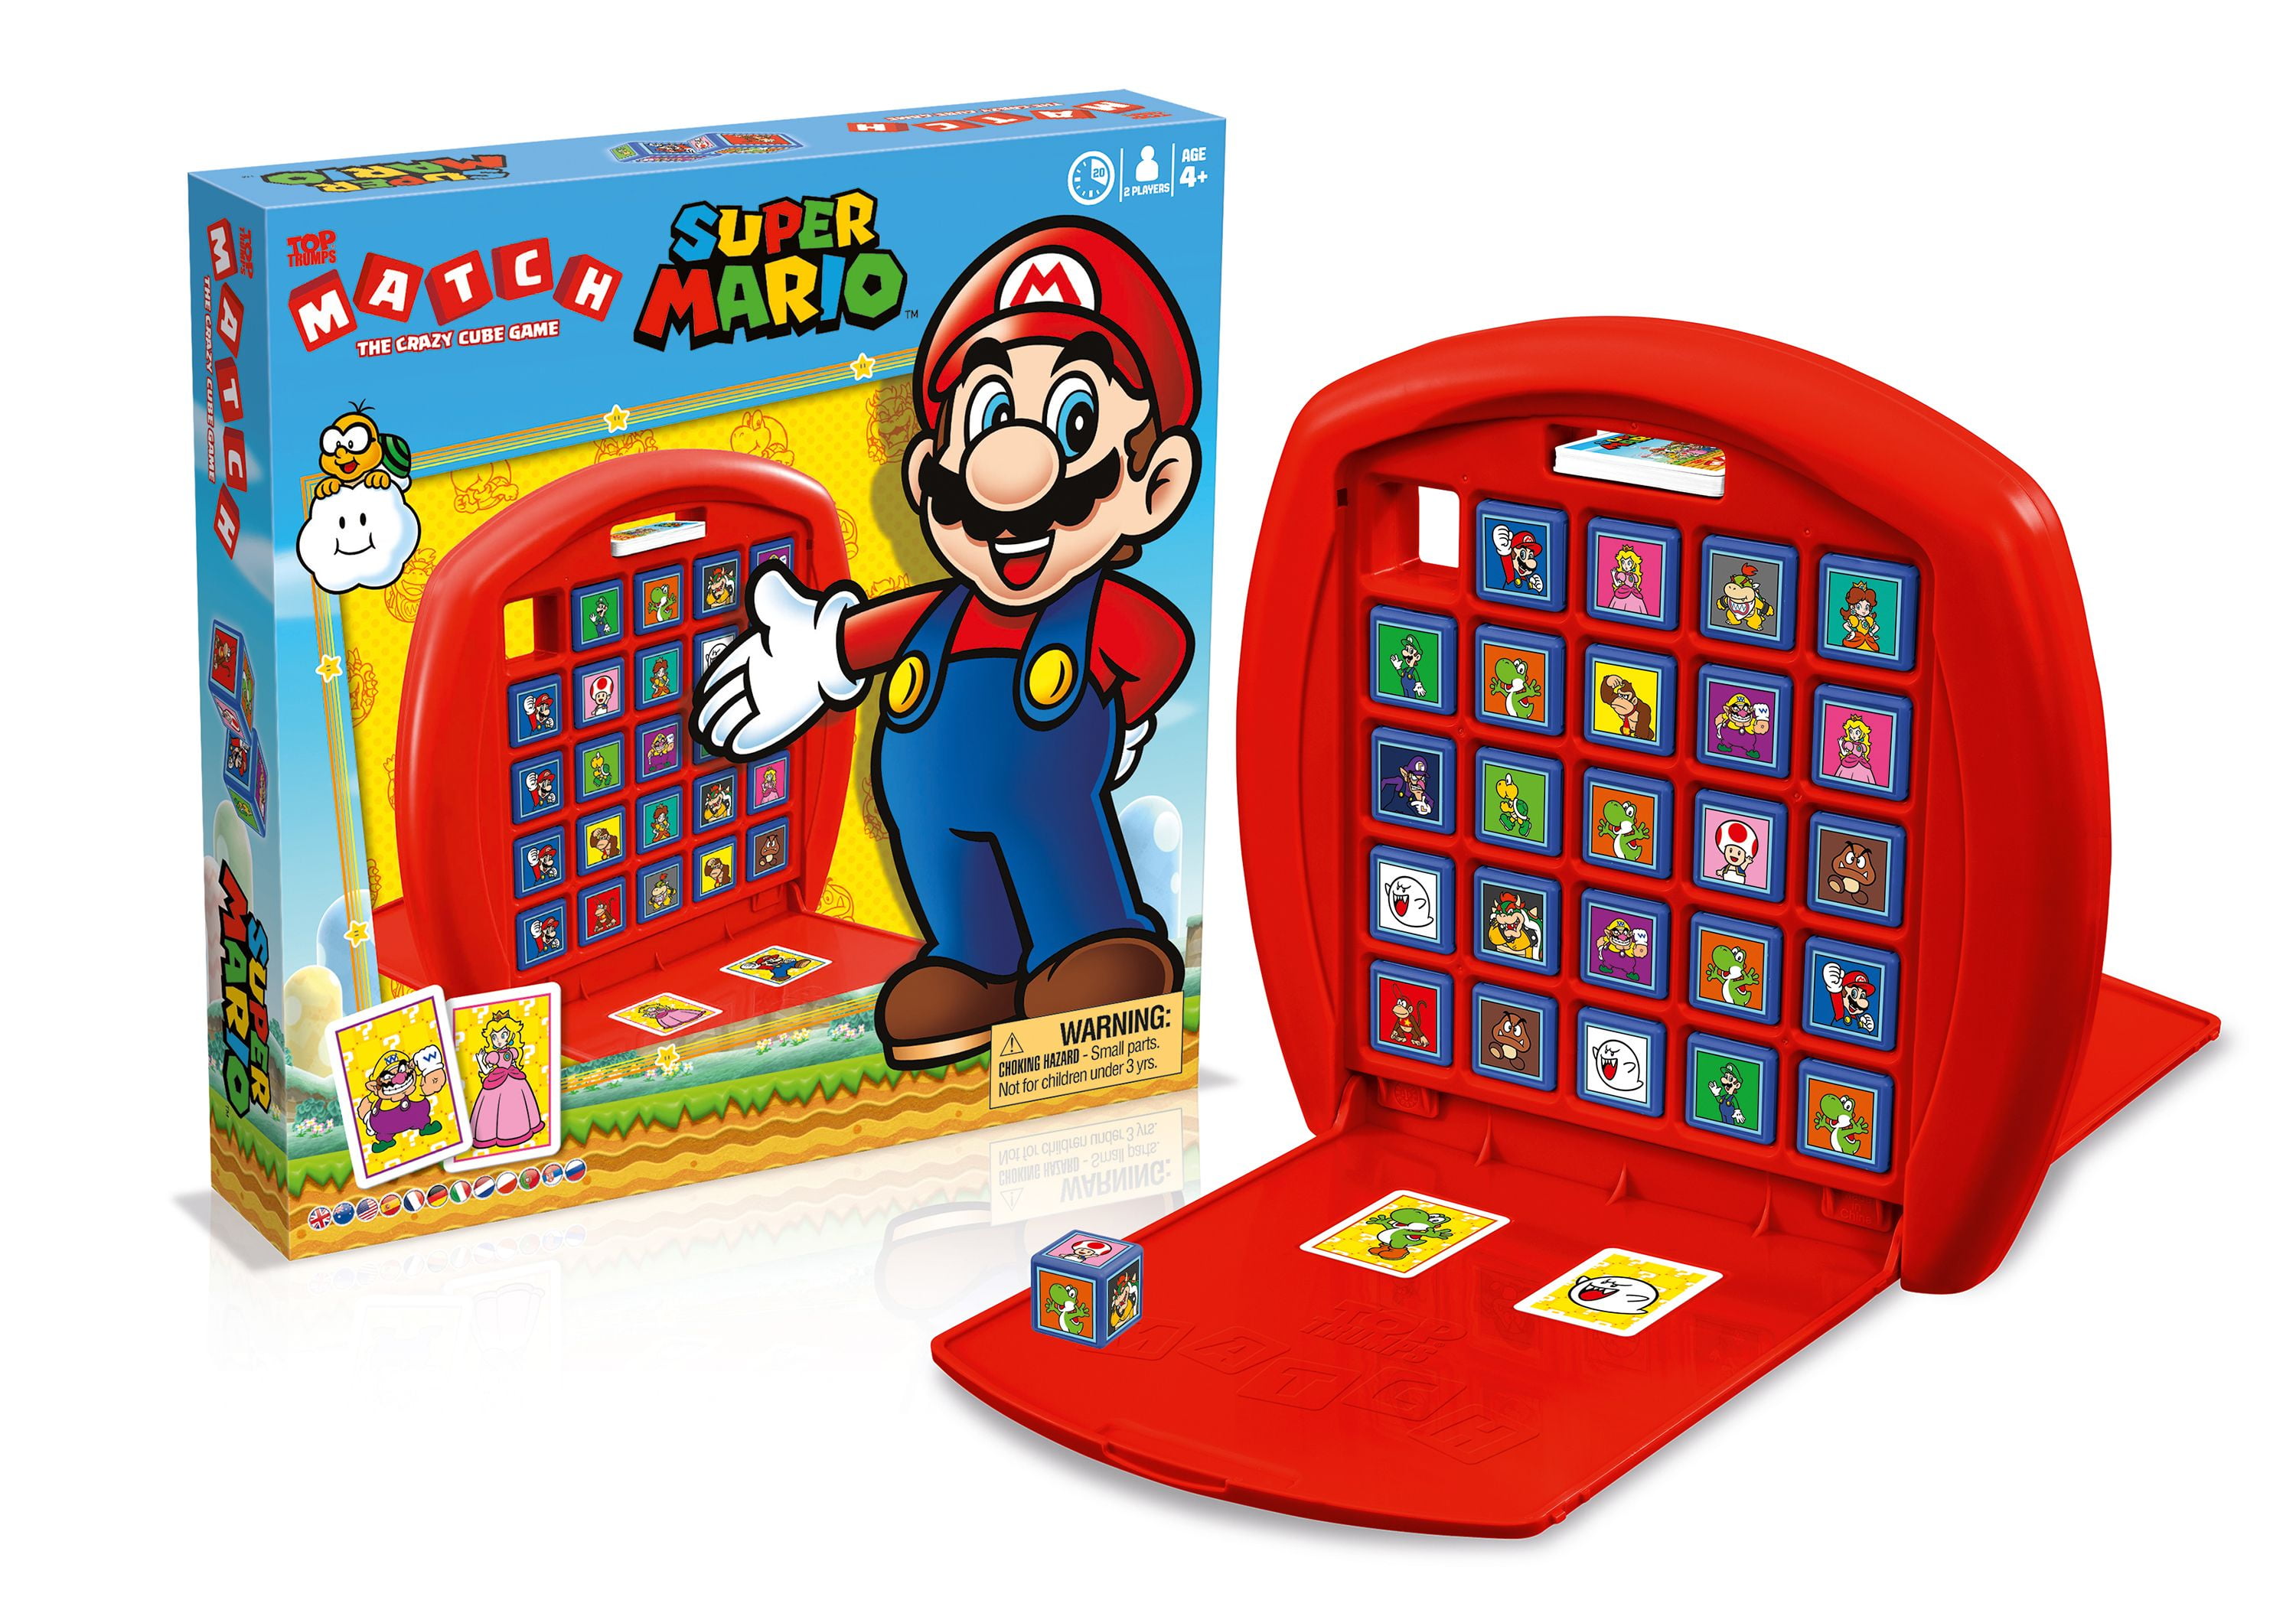 The Crazy Cube Game Match Super Mario Edition